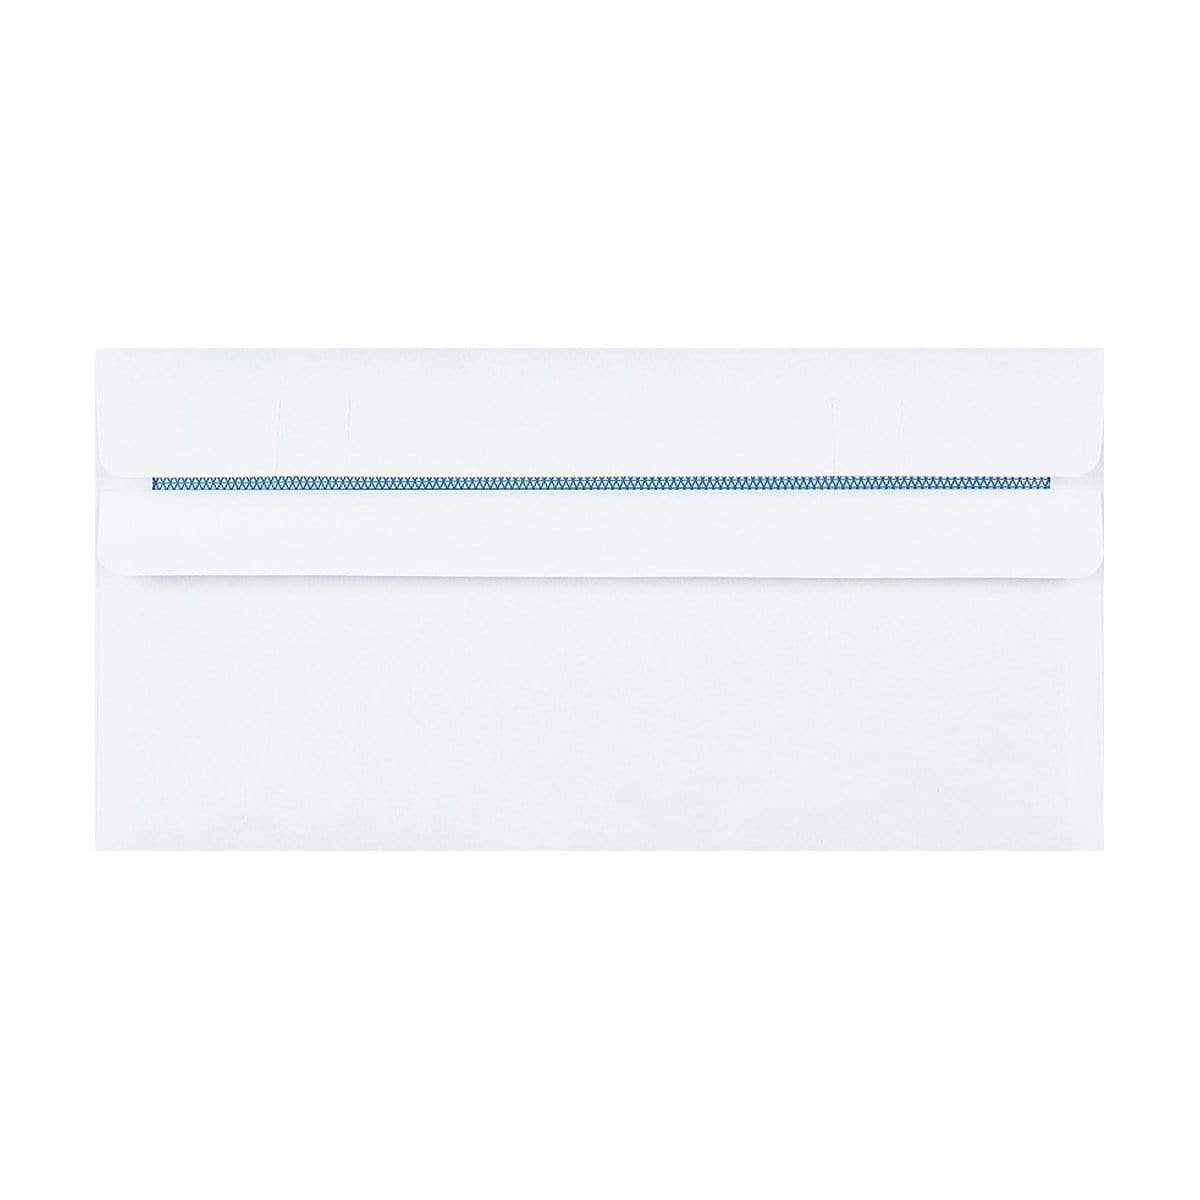 DL+ White 90gsm Self-Seal Envelopes [Qty 1,000] 114 x 229mm - All Colour Envelopes